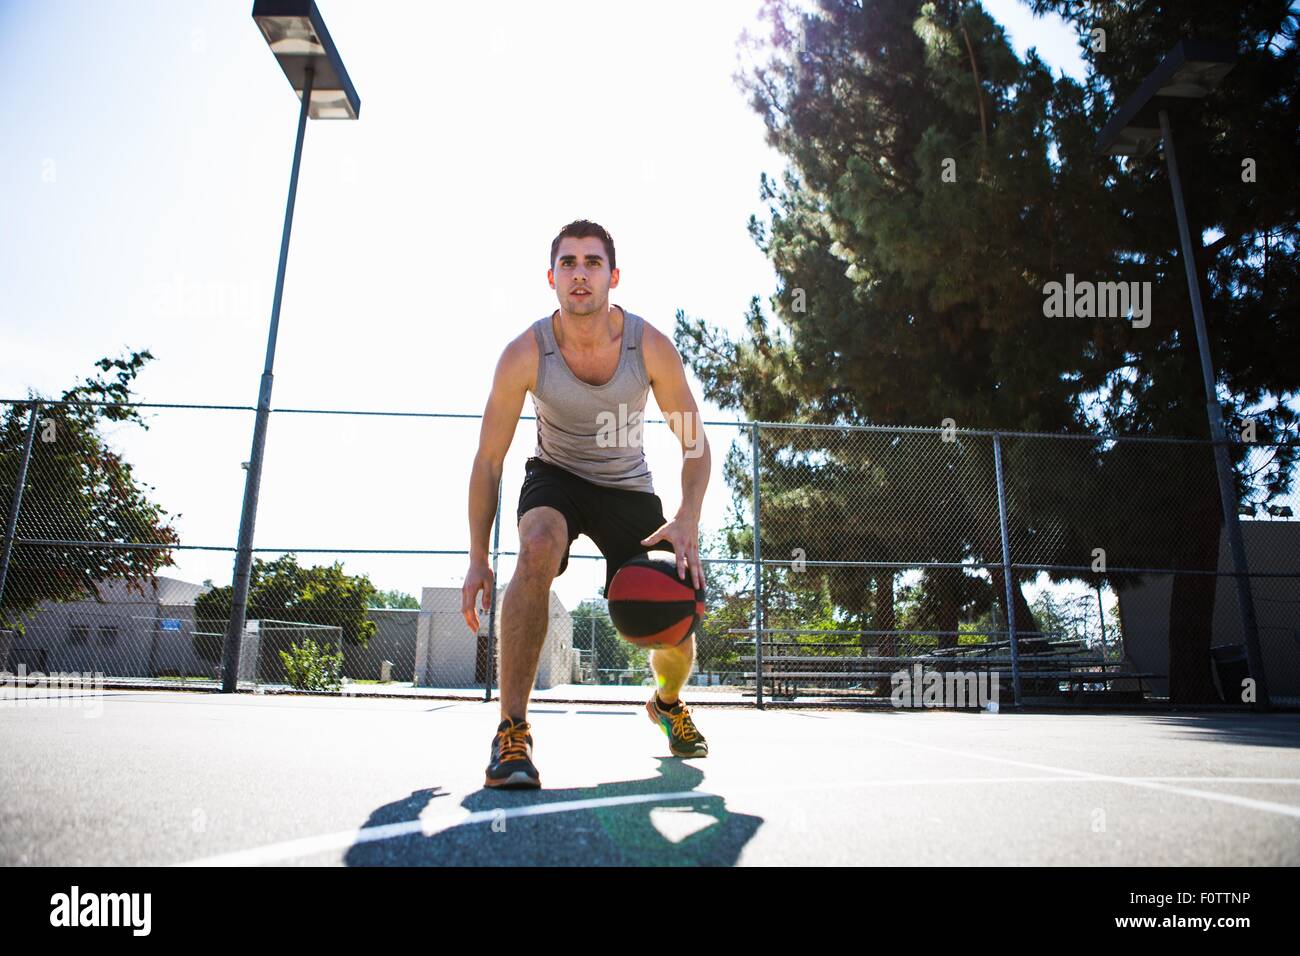 Young male basketball player preparing to throw ball on basketball court Stock Photo